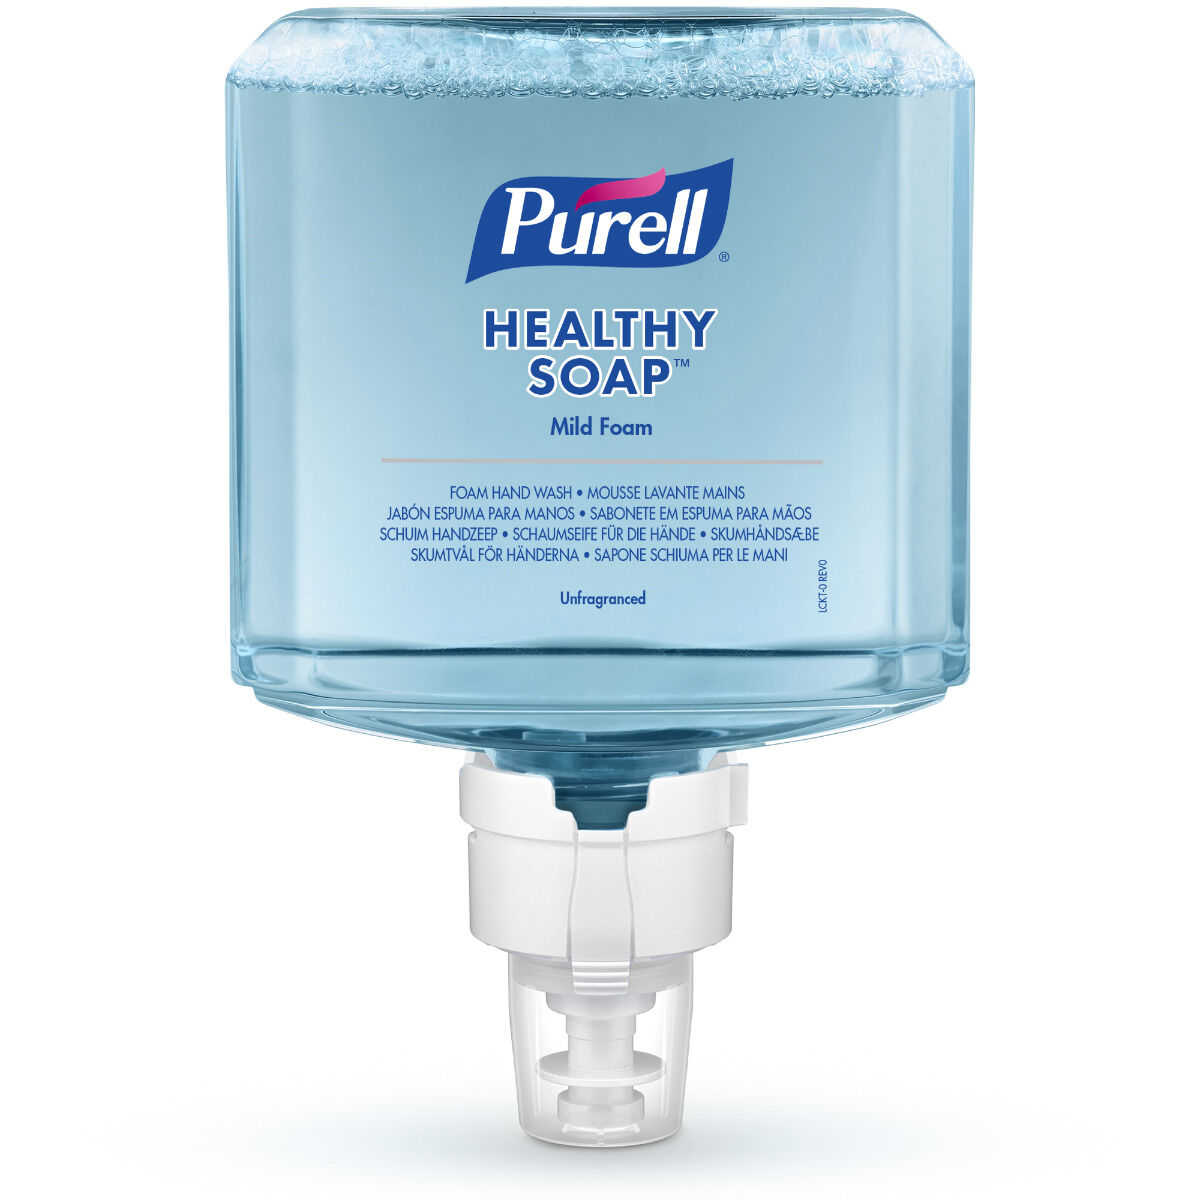 13: Purell ES 6 Healthy Soap Mild Foam, skumsæbe u. parfume, 1200 ml